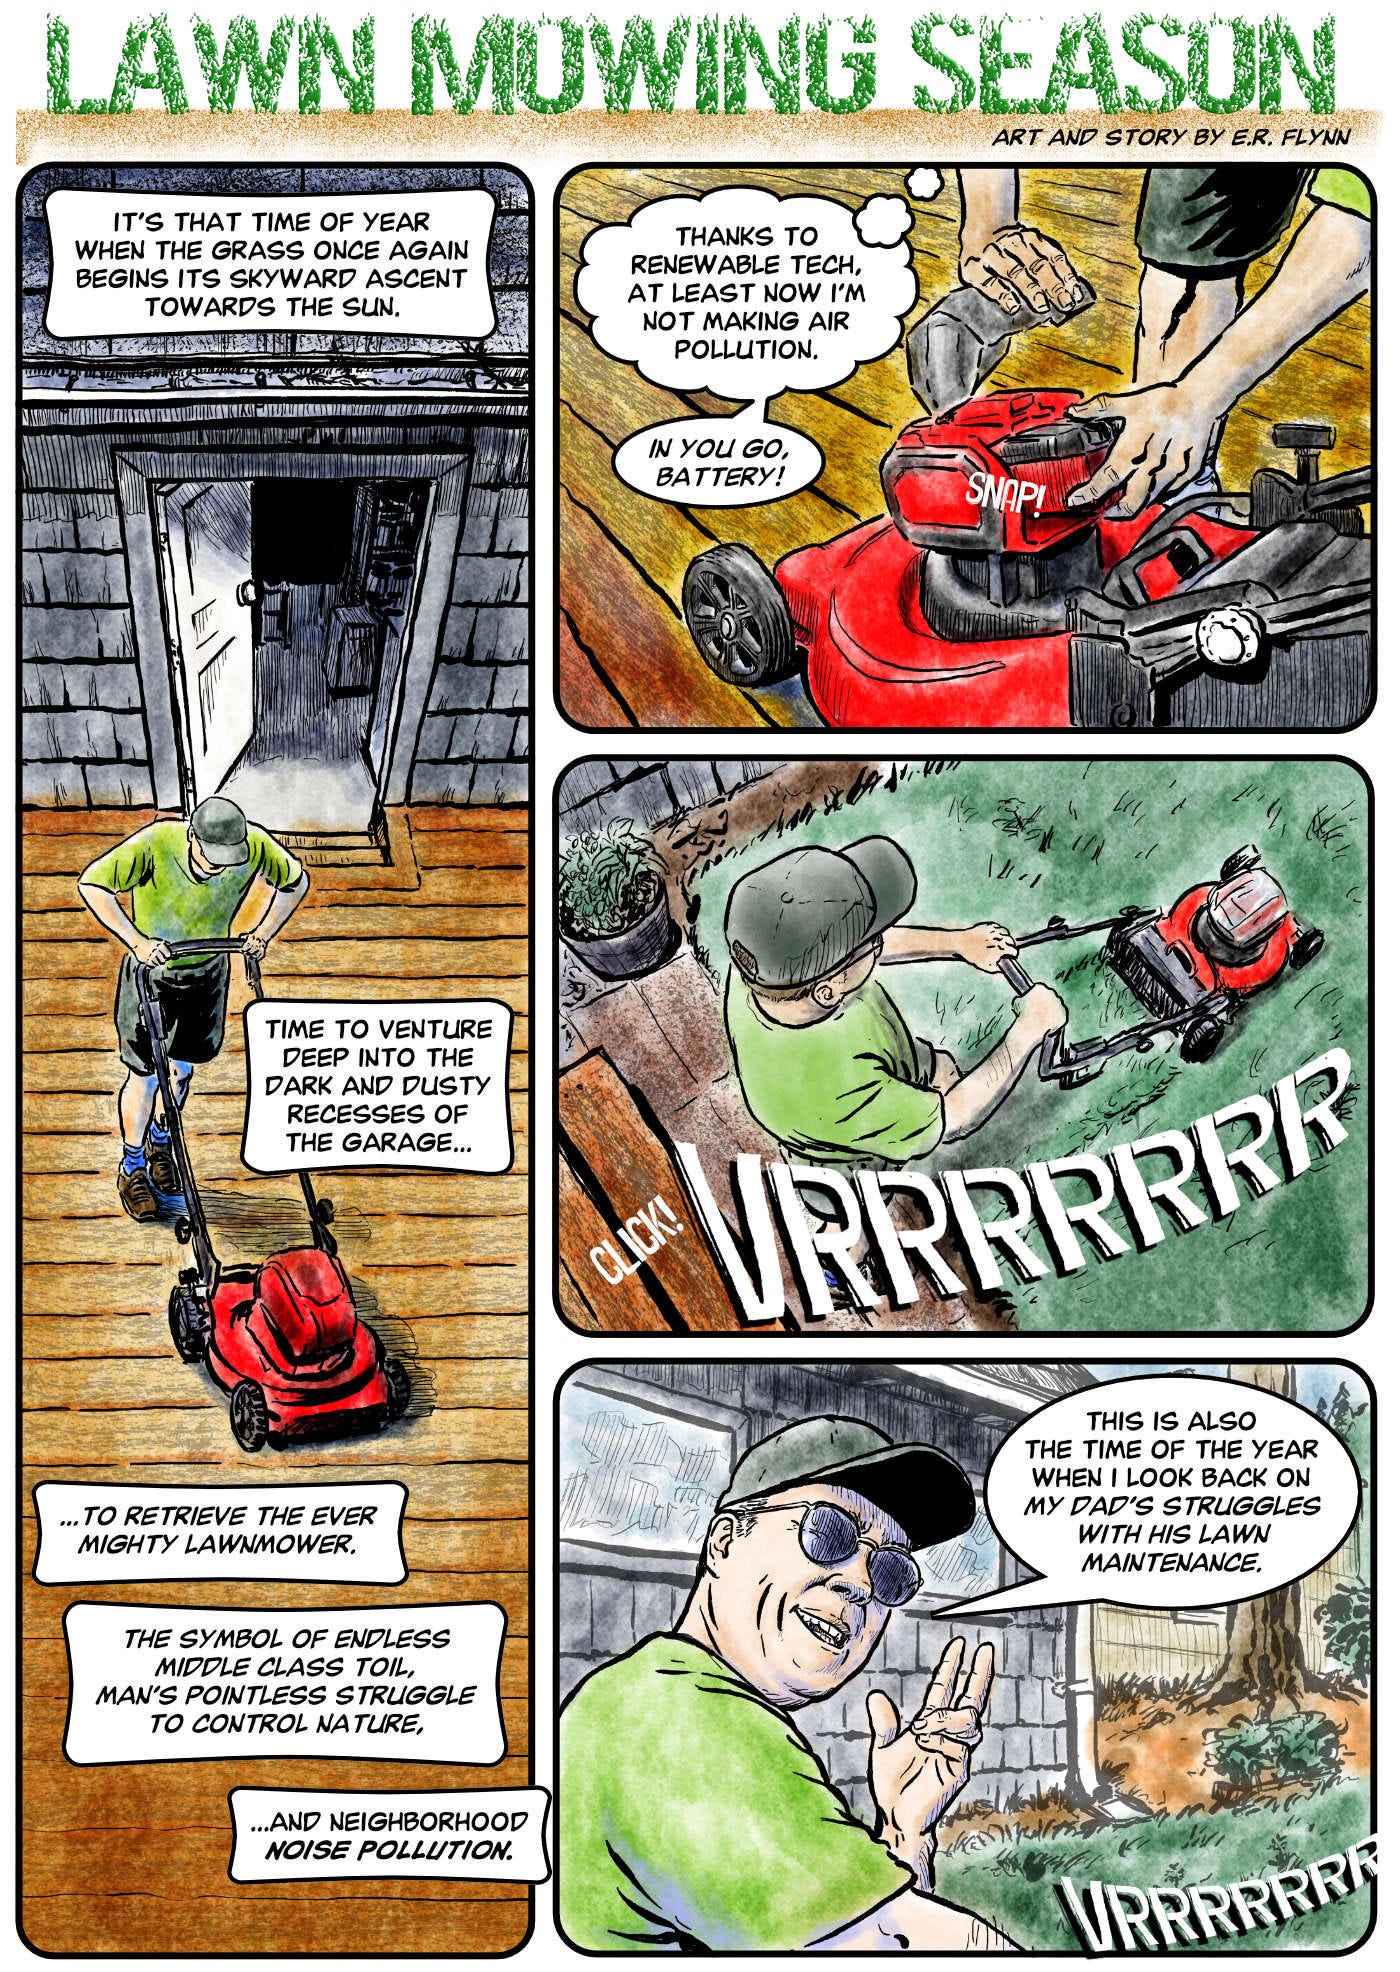 Lawn Mowing Season Page 1 comic by ER Flynn